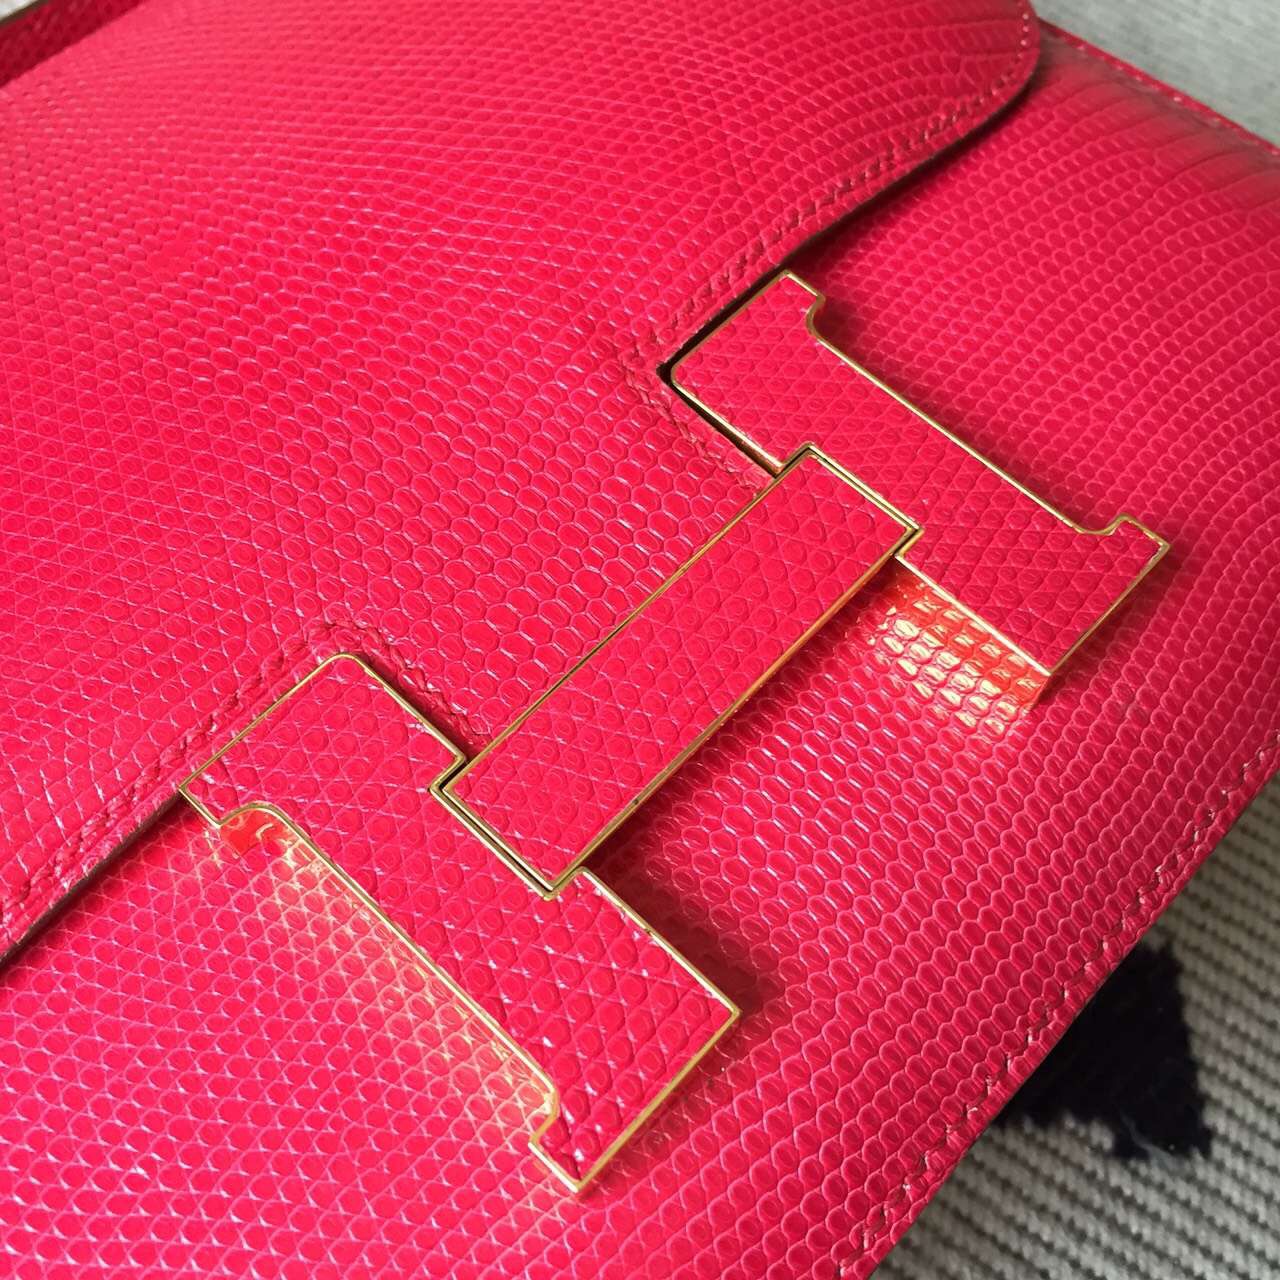 Discount Hermes Hot Pink Lizard Leather Constance Bag19cm